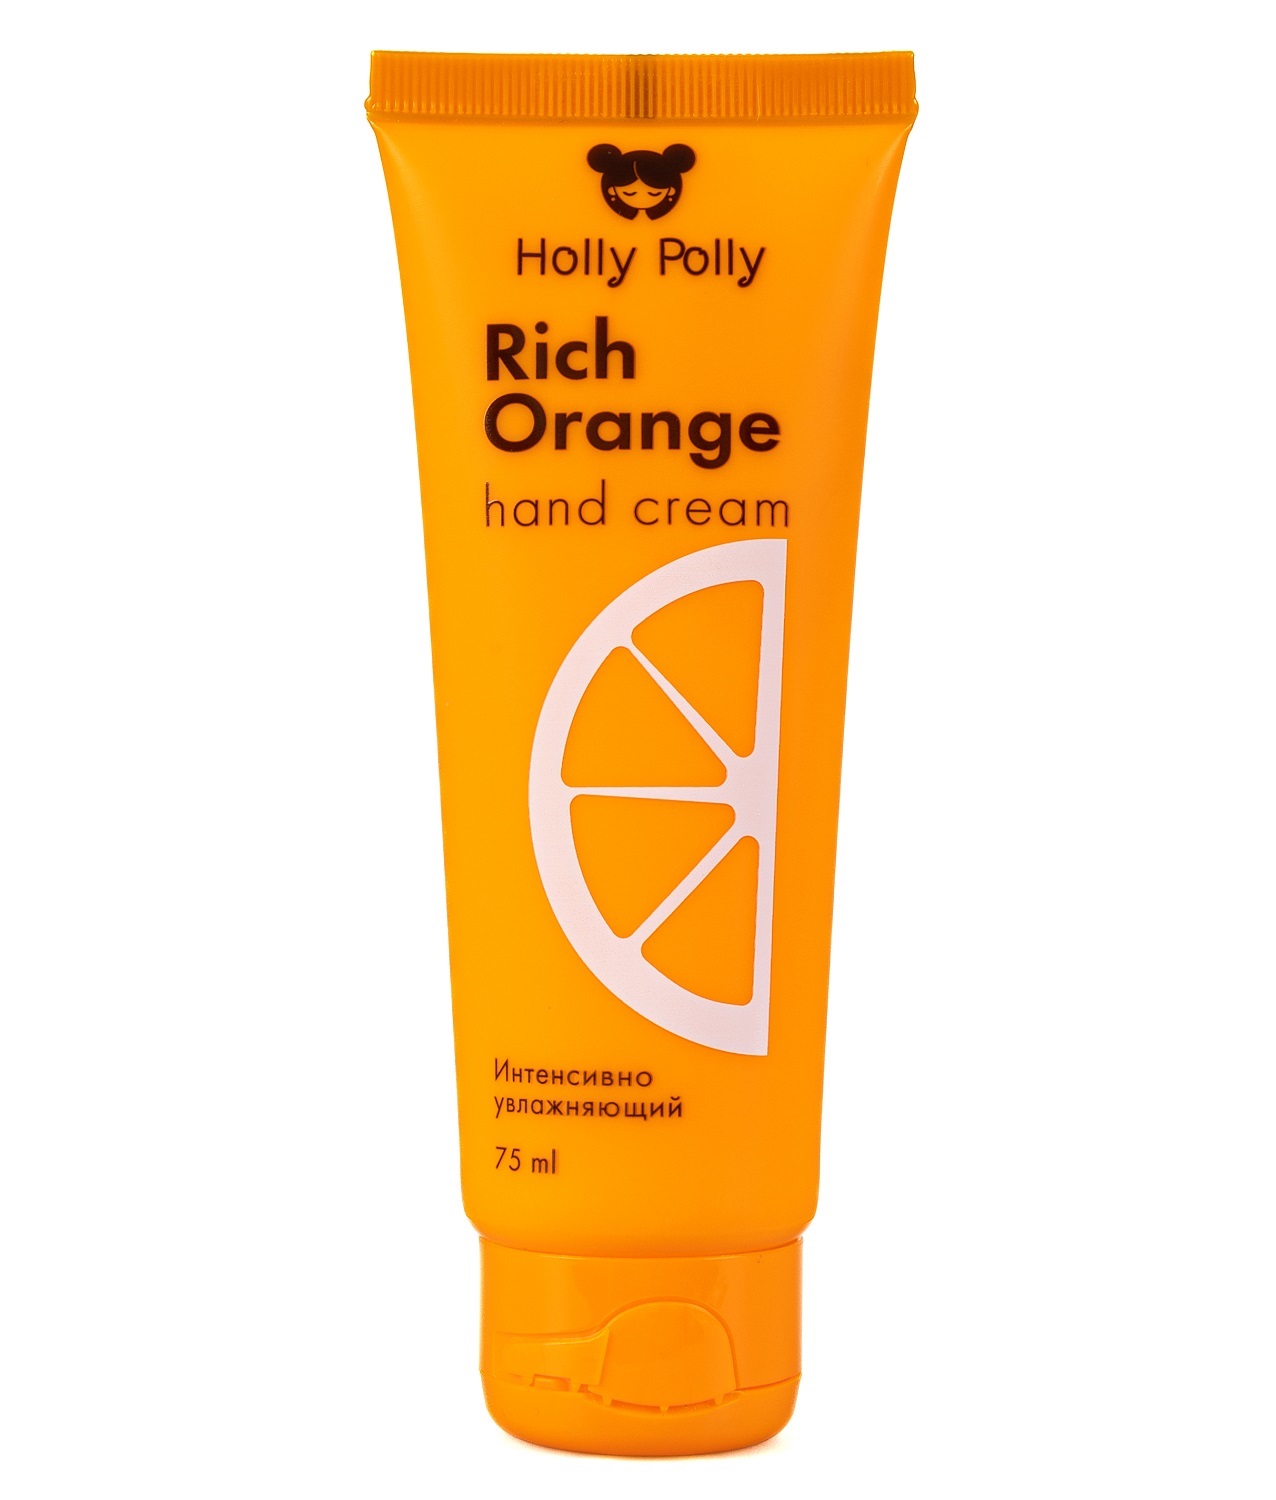 Холли Полли Увлажняющий крем для рук Rich Orange, 75 мл (Holly Polly, Foot & Hands) фото 0